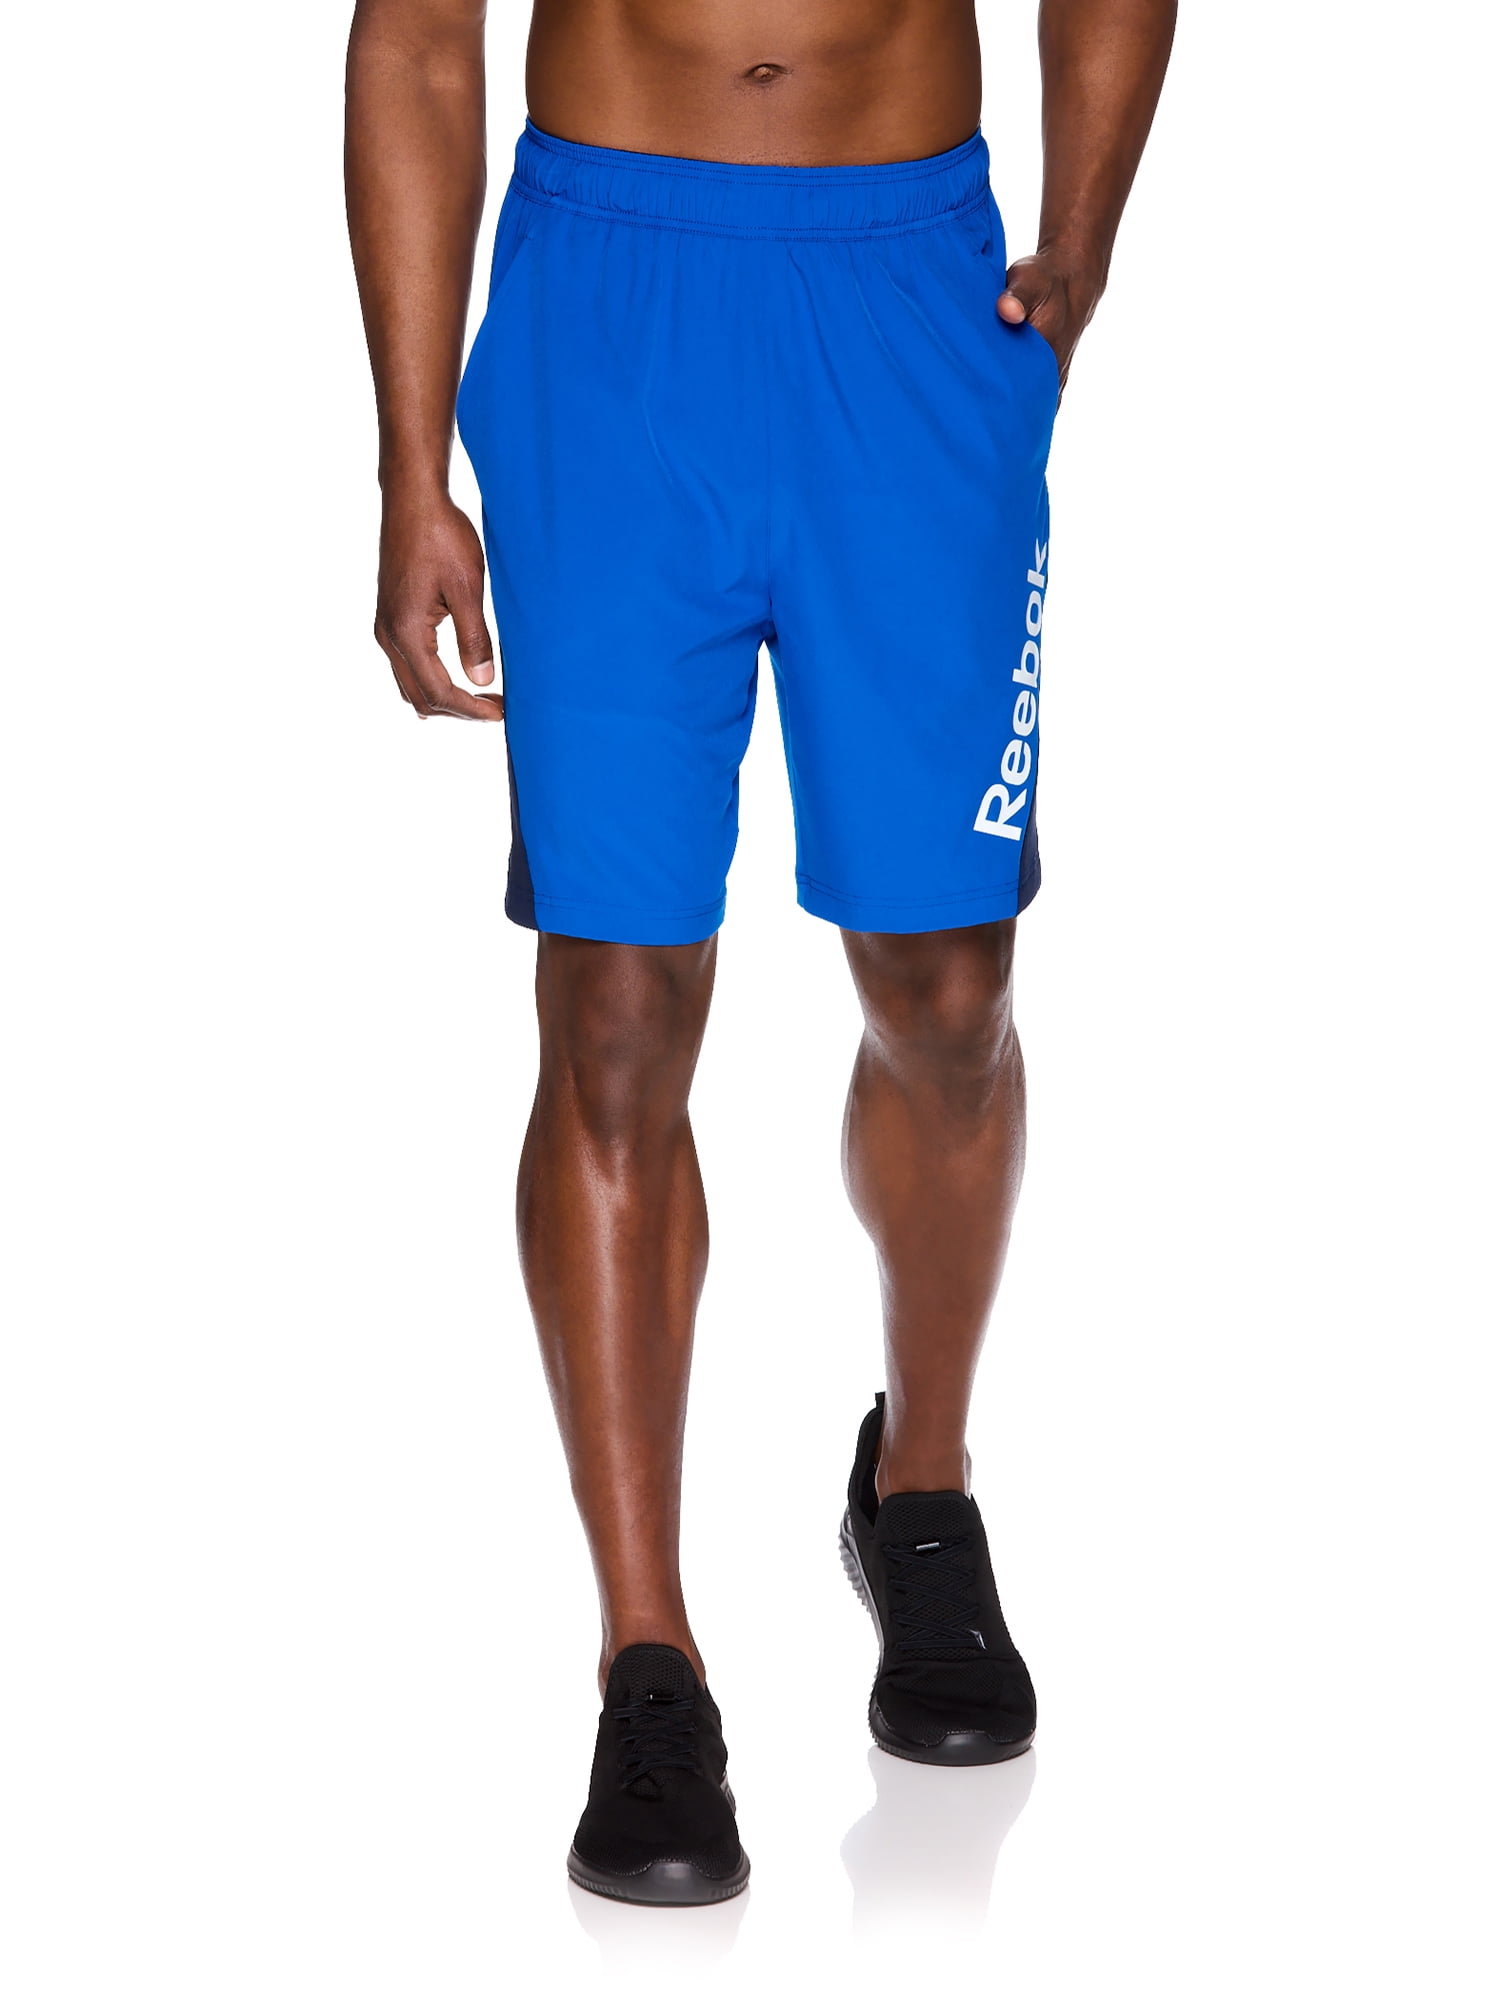 Reebok 4XL Shorts Elastic Drawstring Blue Polyester New Play Dry Big & Tall 